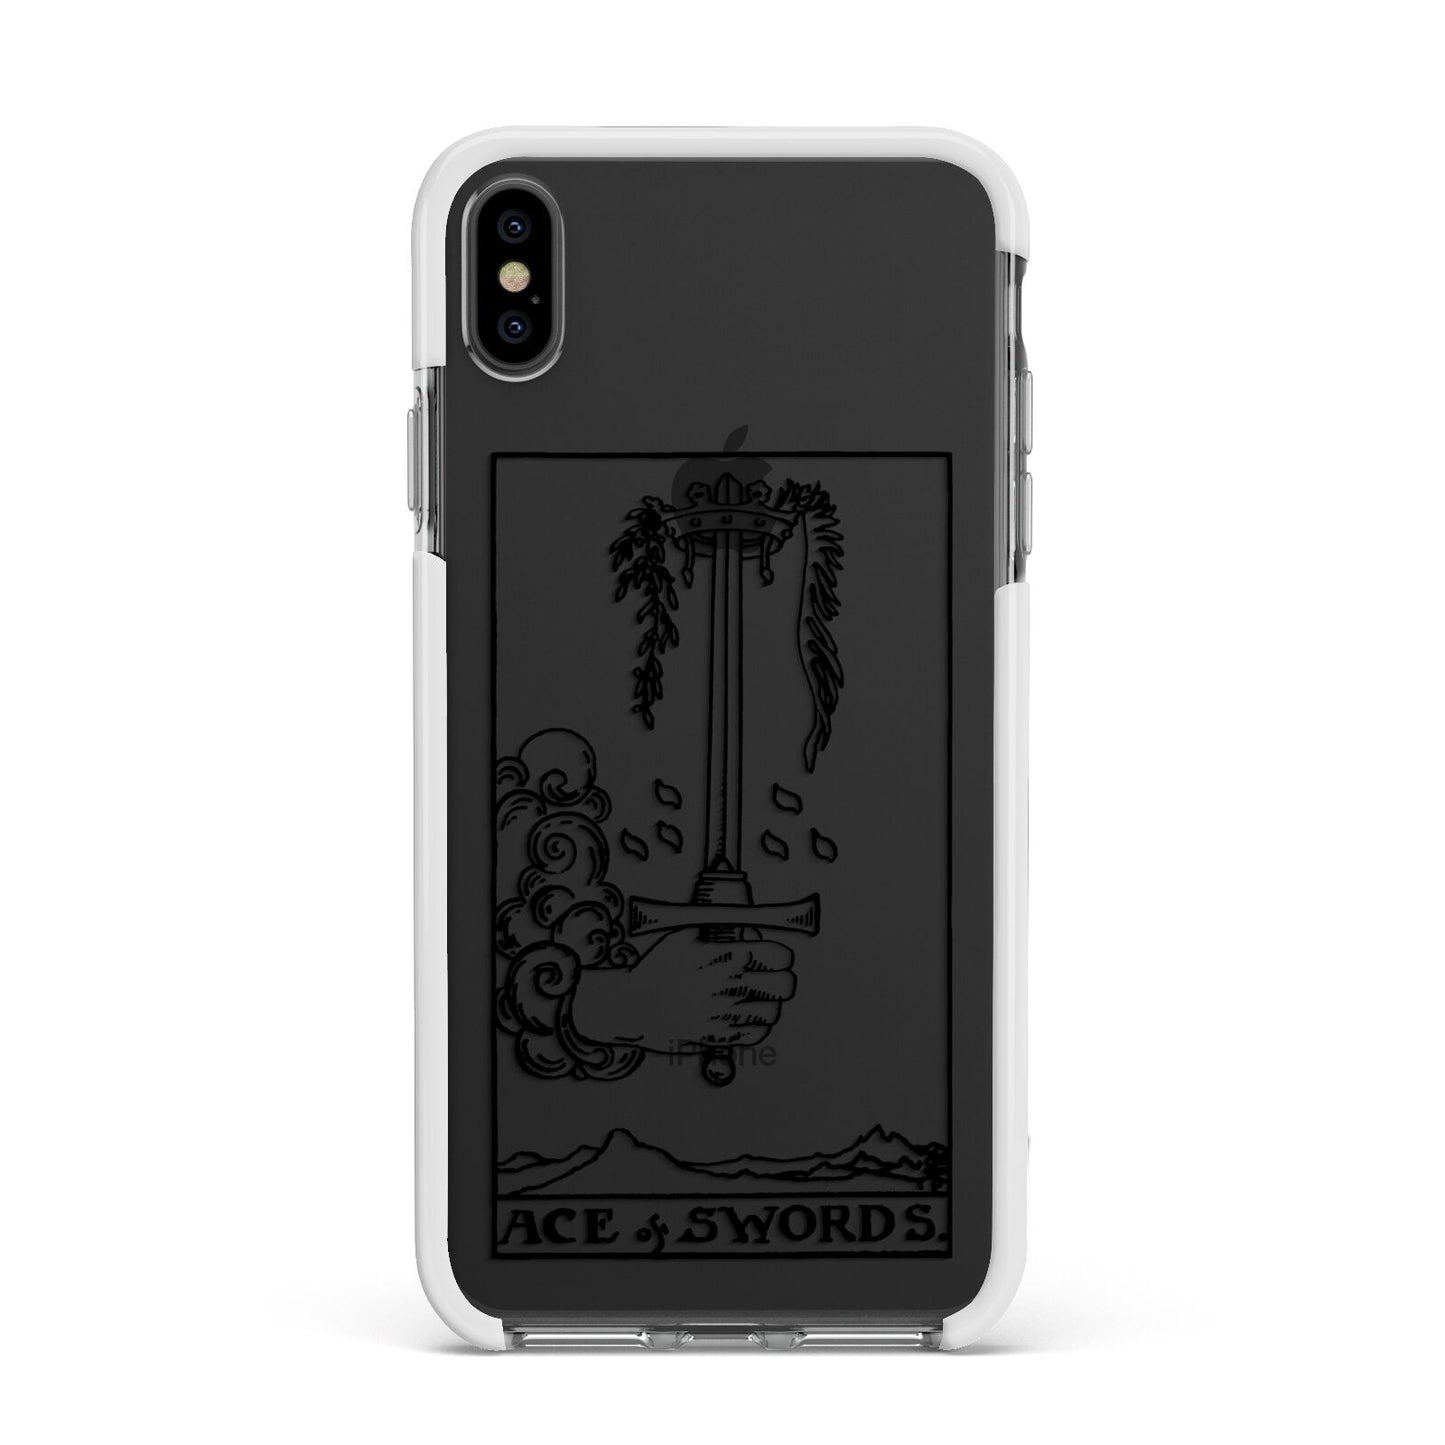 Ace of Swords Monochrome Apple iPhone Xs Max Impact Case White Edge on Black Phone